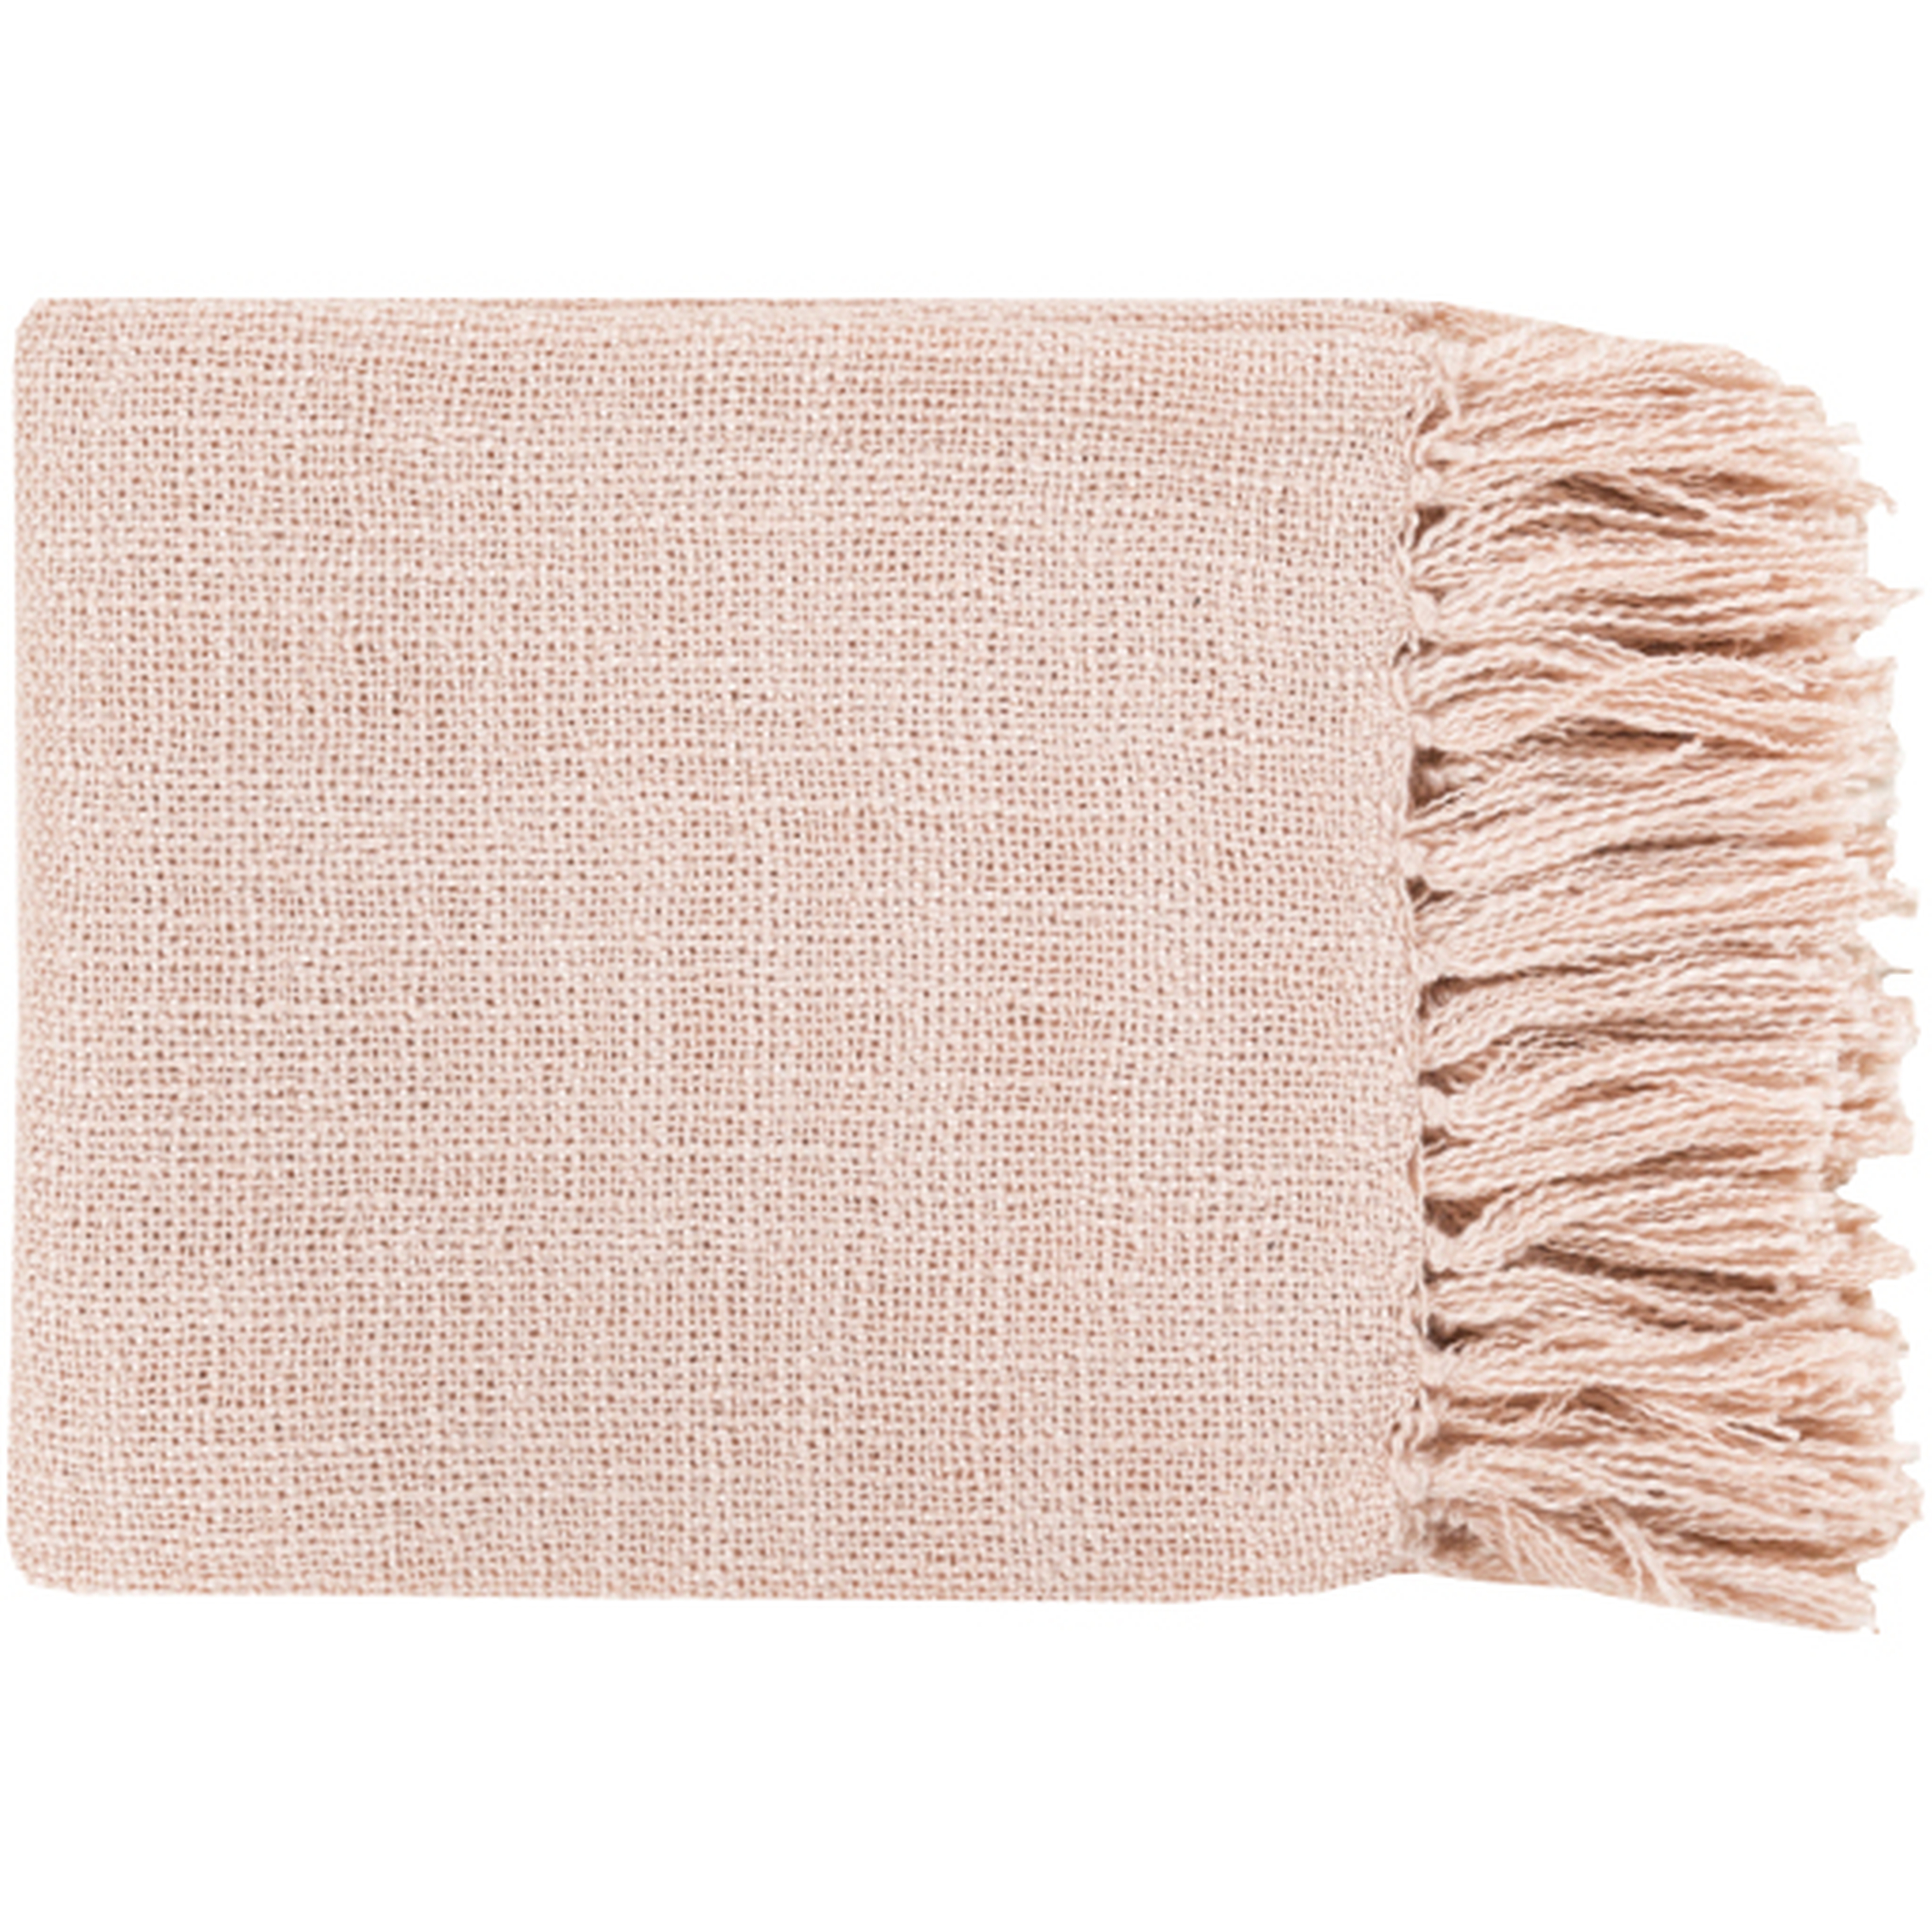 Tilda Throw Blanket, Pale Pink - Neva Home